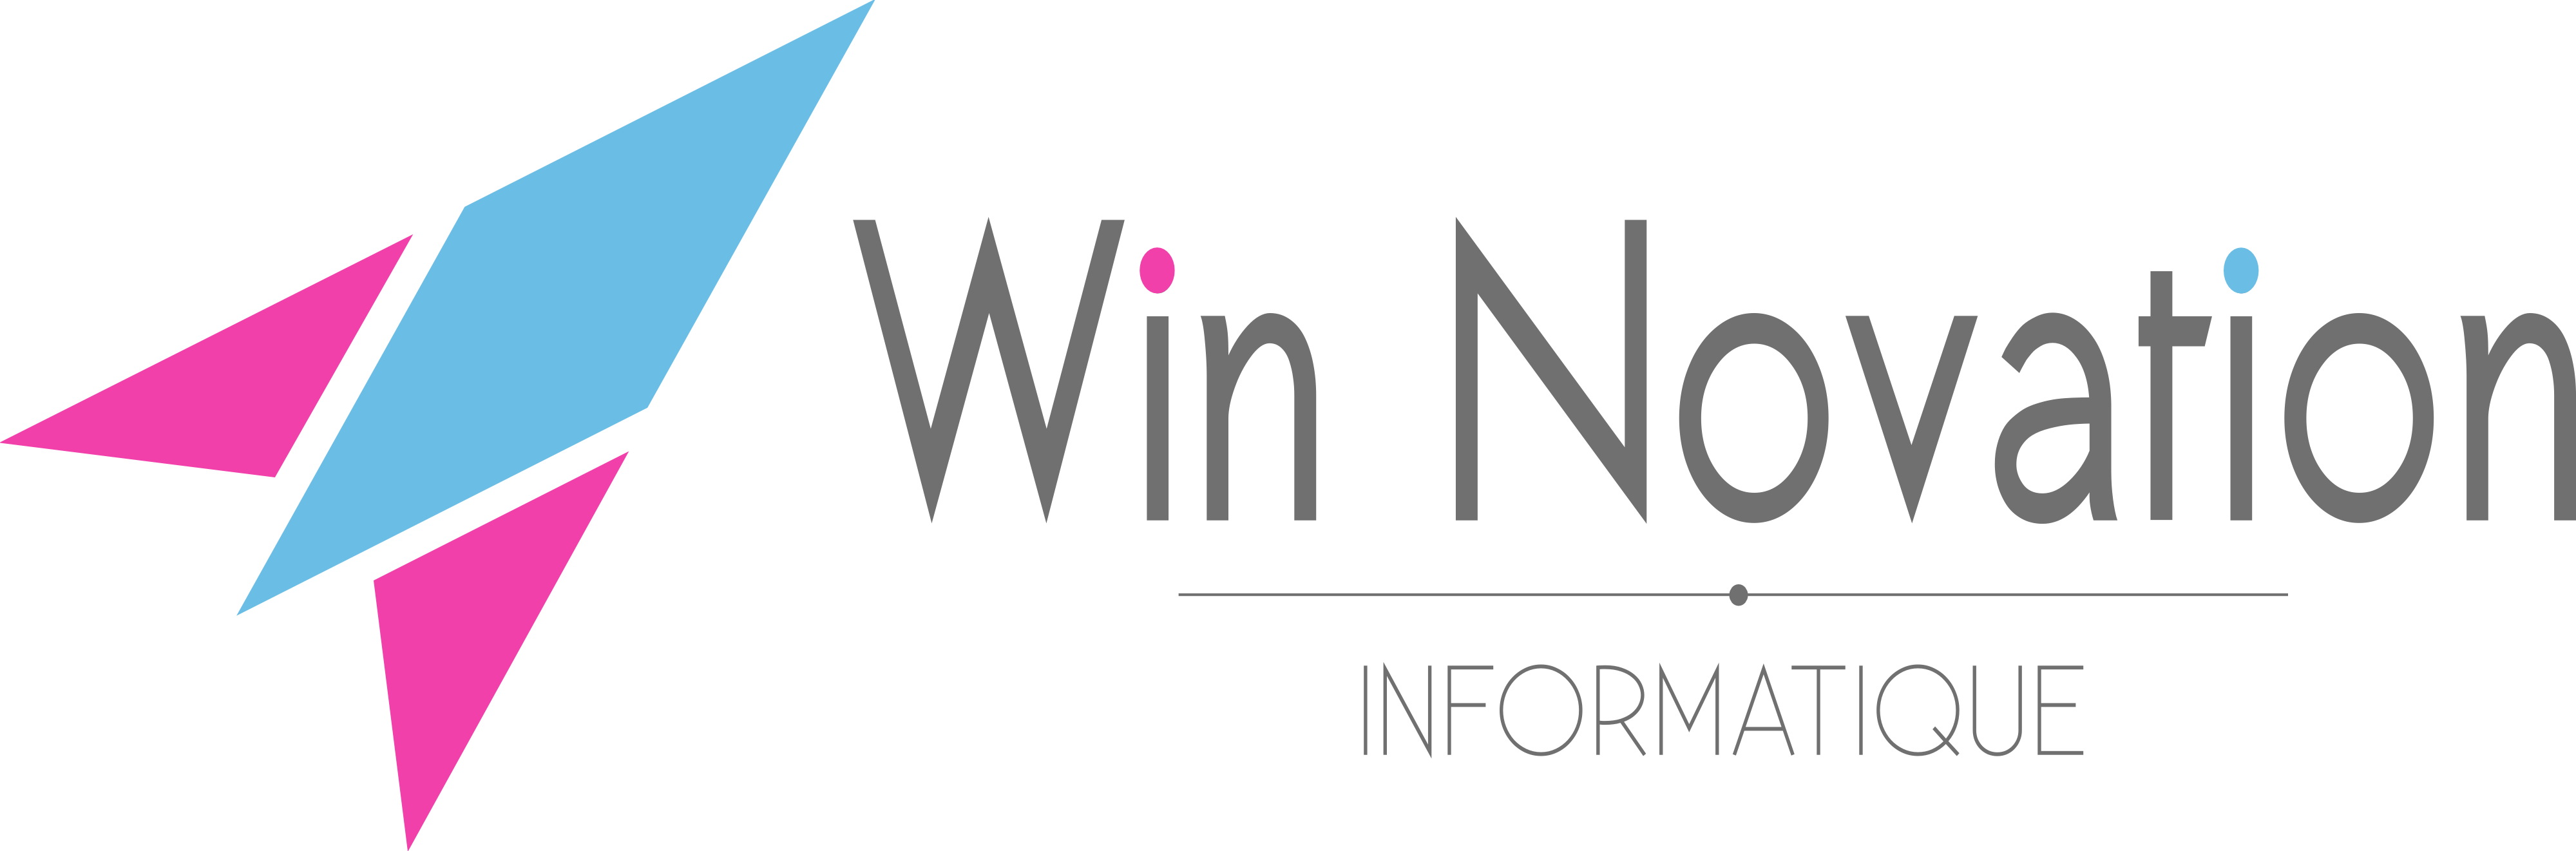 Win Novation Informatique